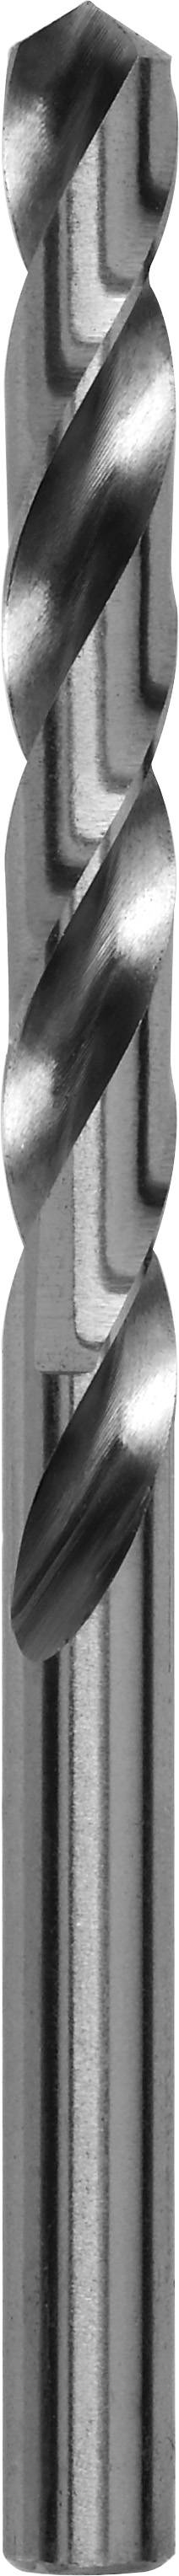 BOSCH HSS Metall-Spiralbohrer 11 mm 2609255057 Gesamtlänge 142 mm geschliffen DIN 338 Zylinderschaft